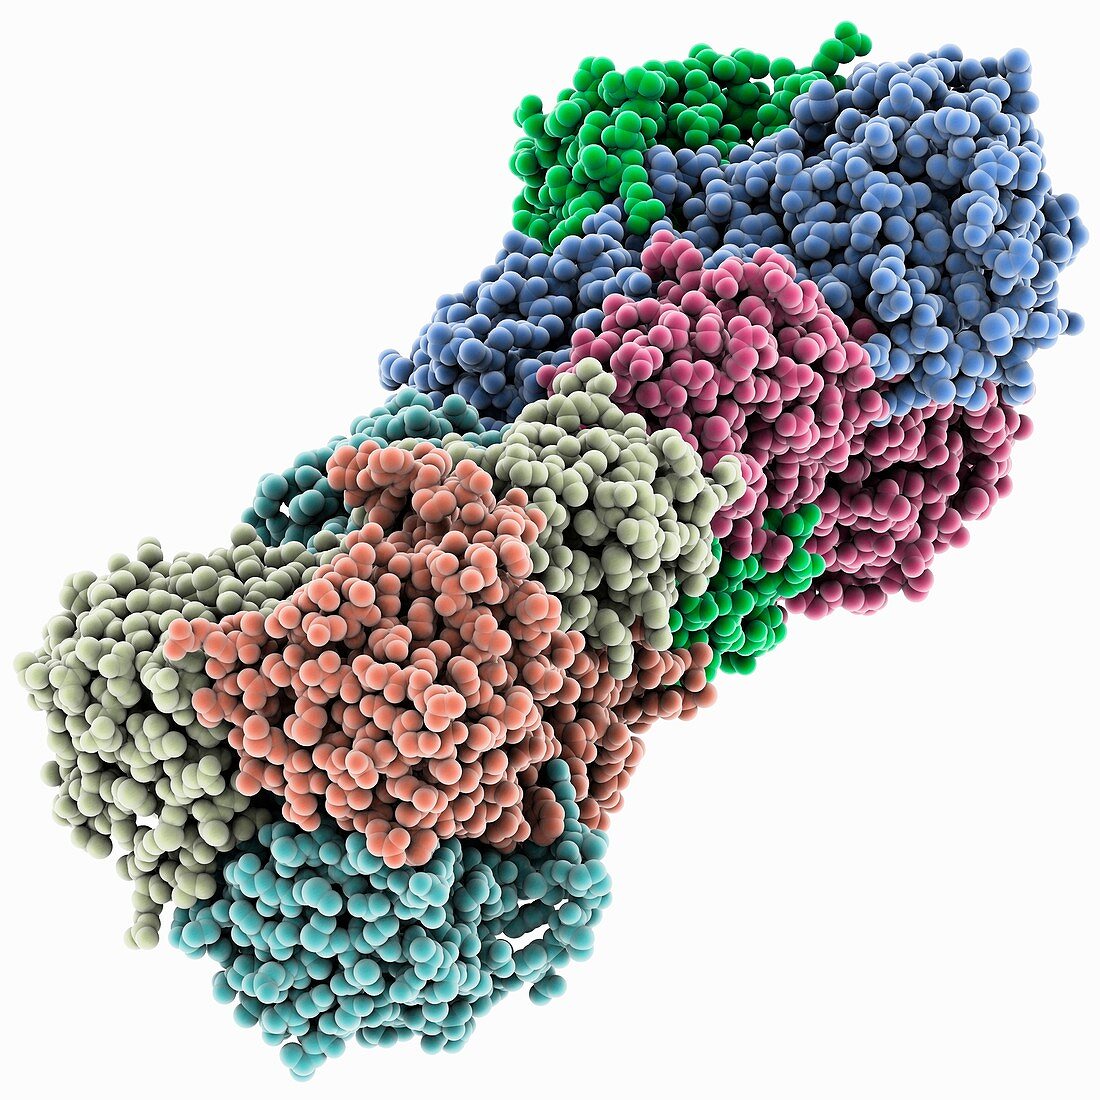 Bluetongue virus protein VP7 structure